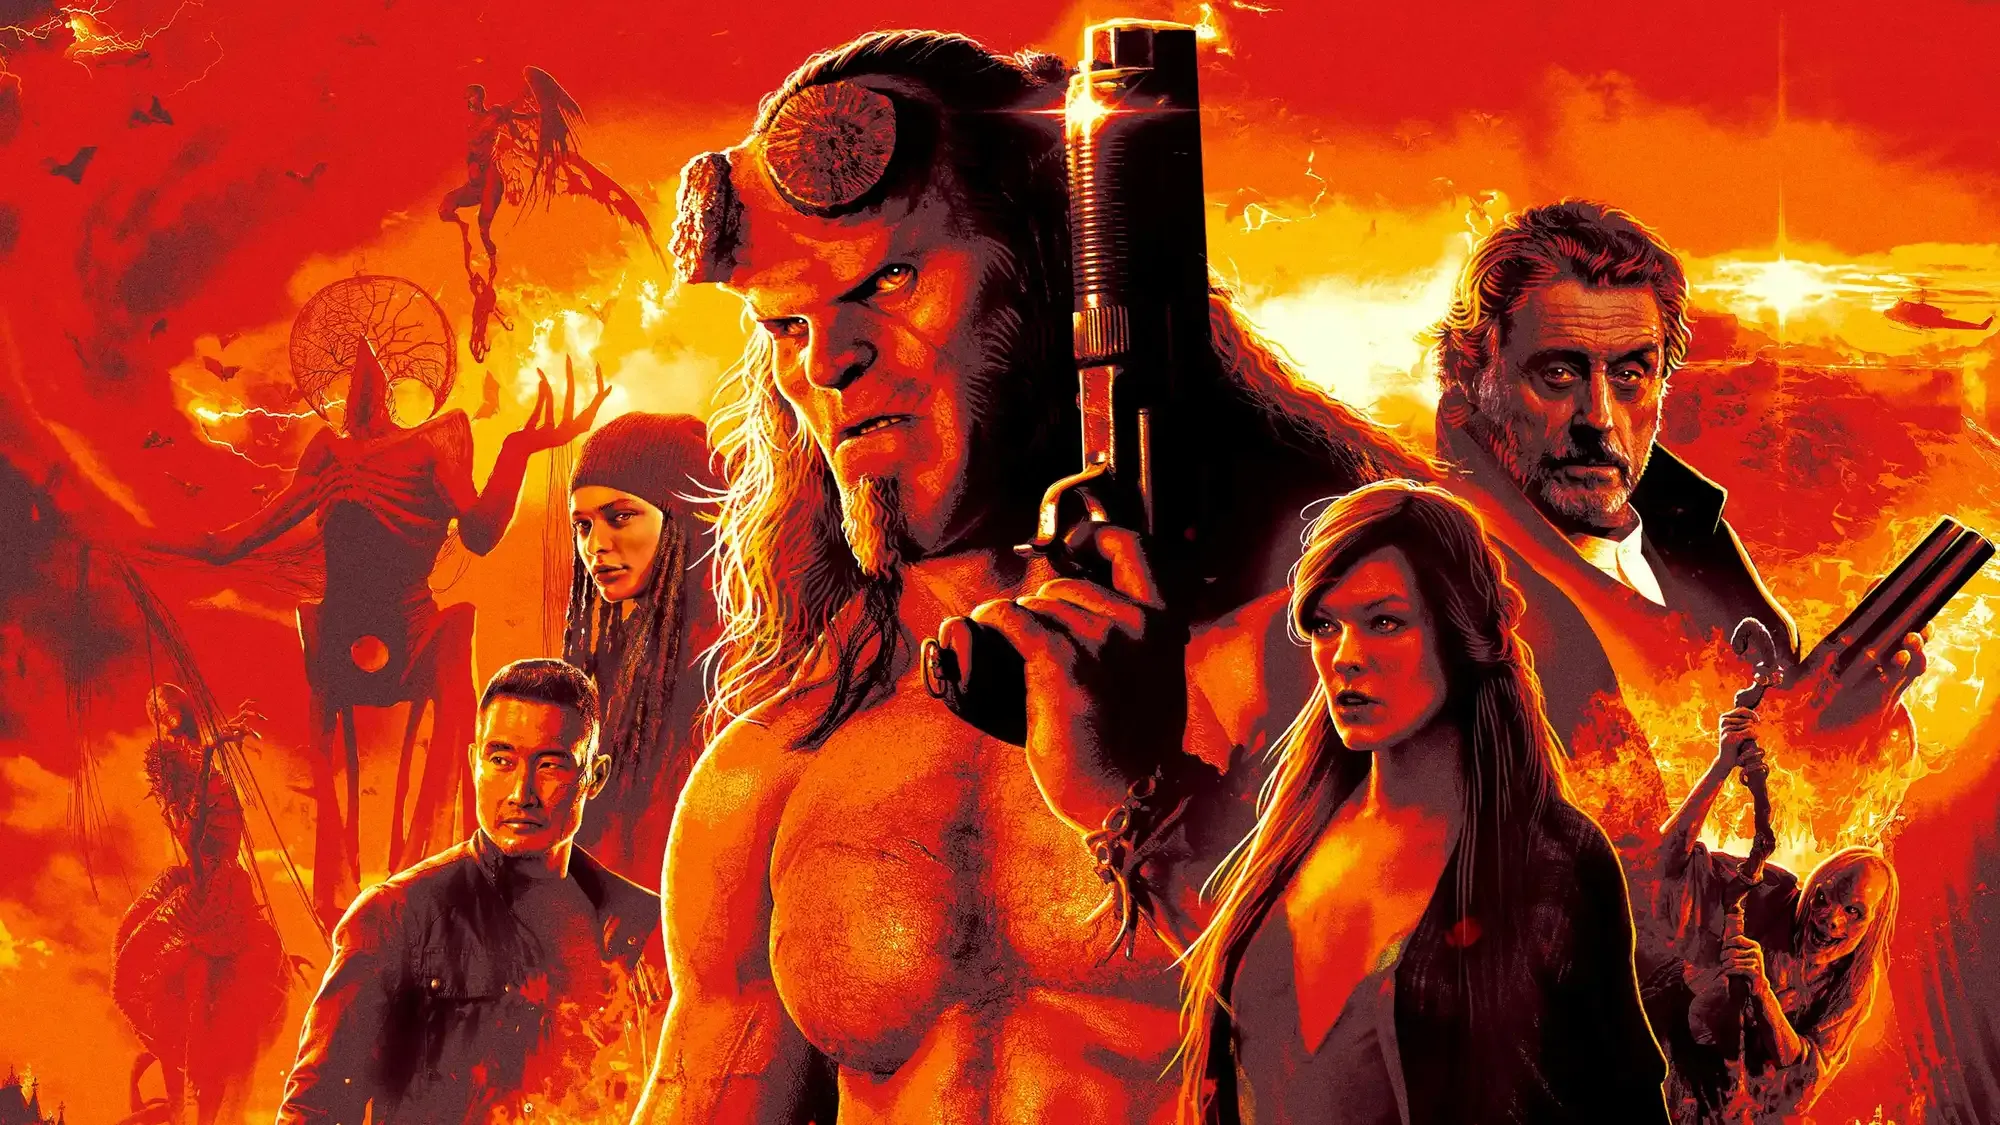 Hellboy movie review